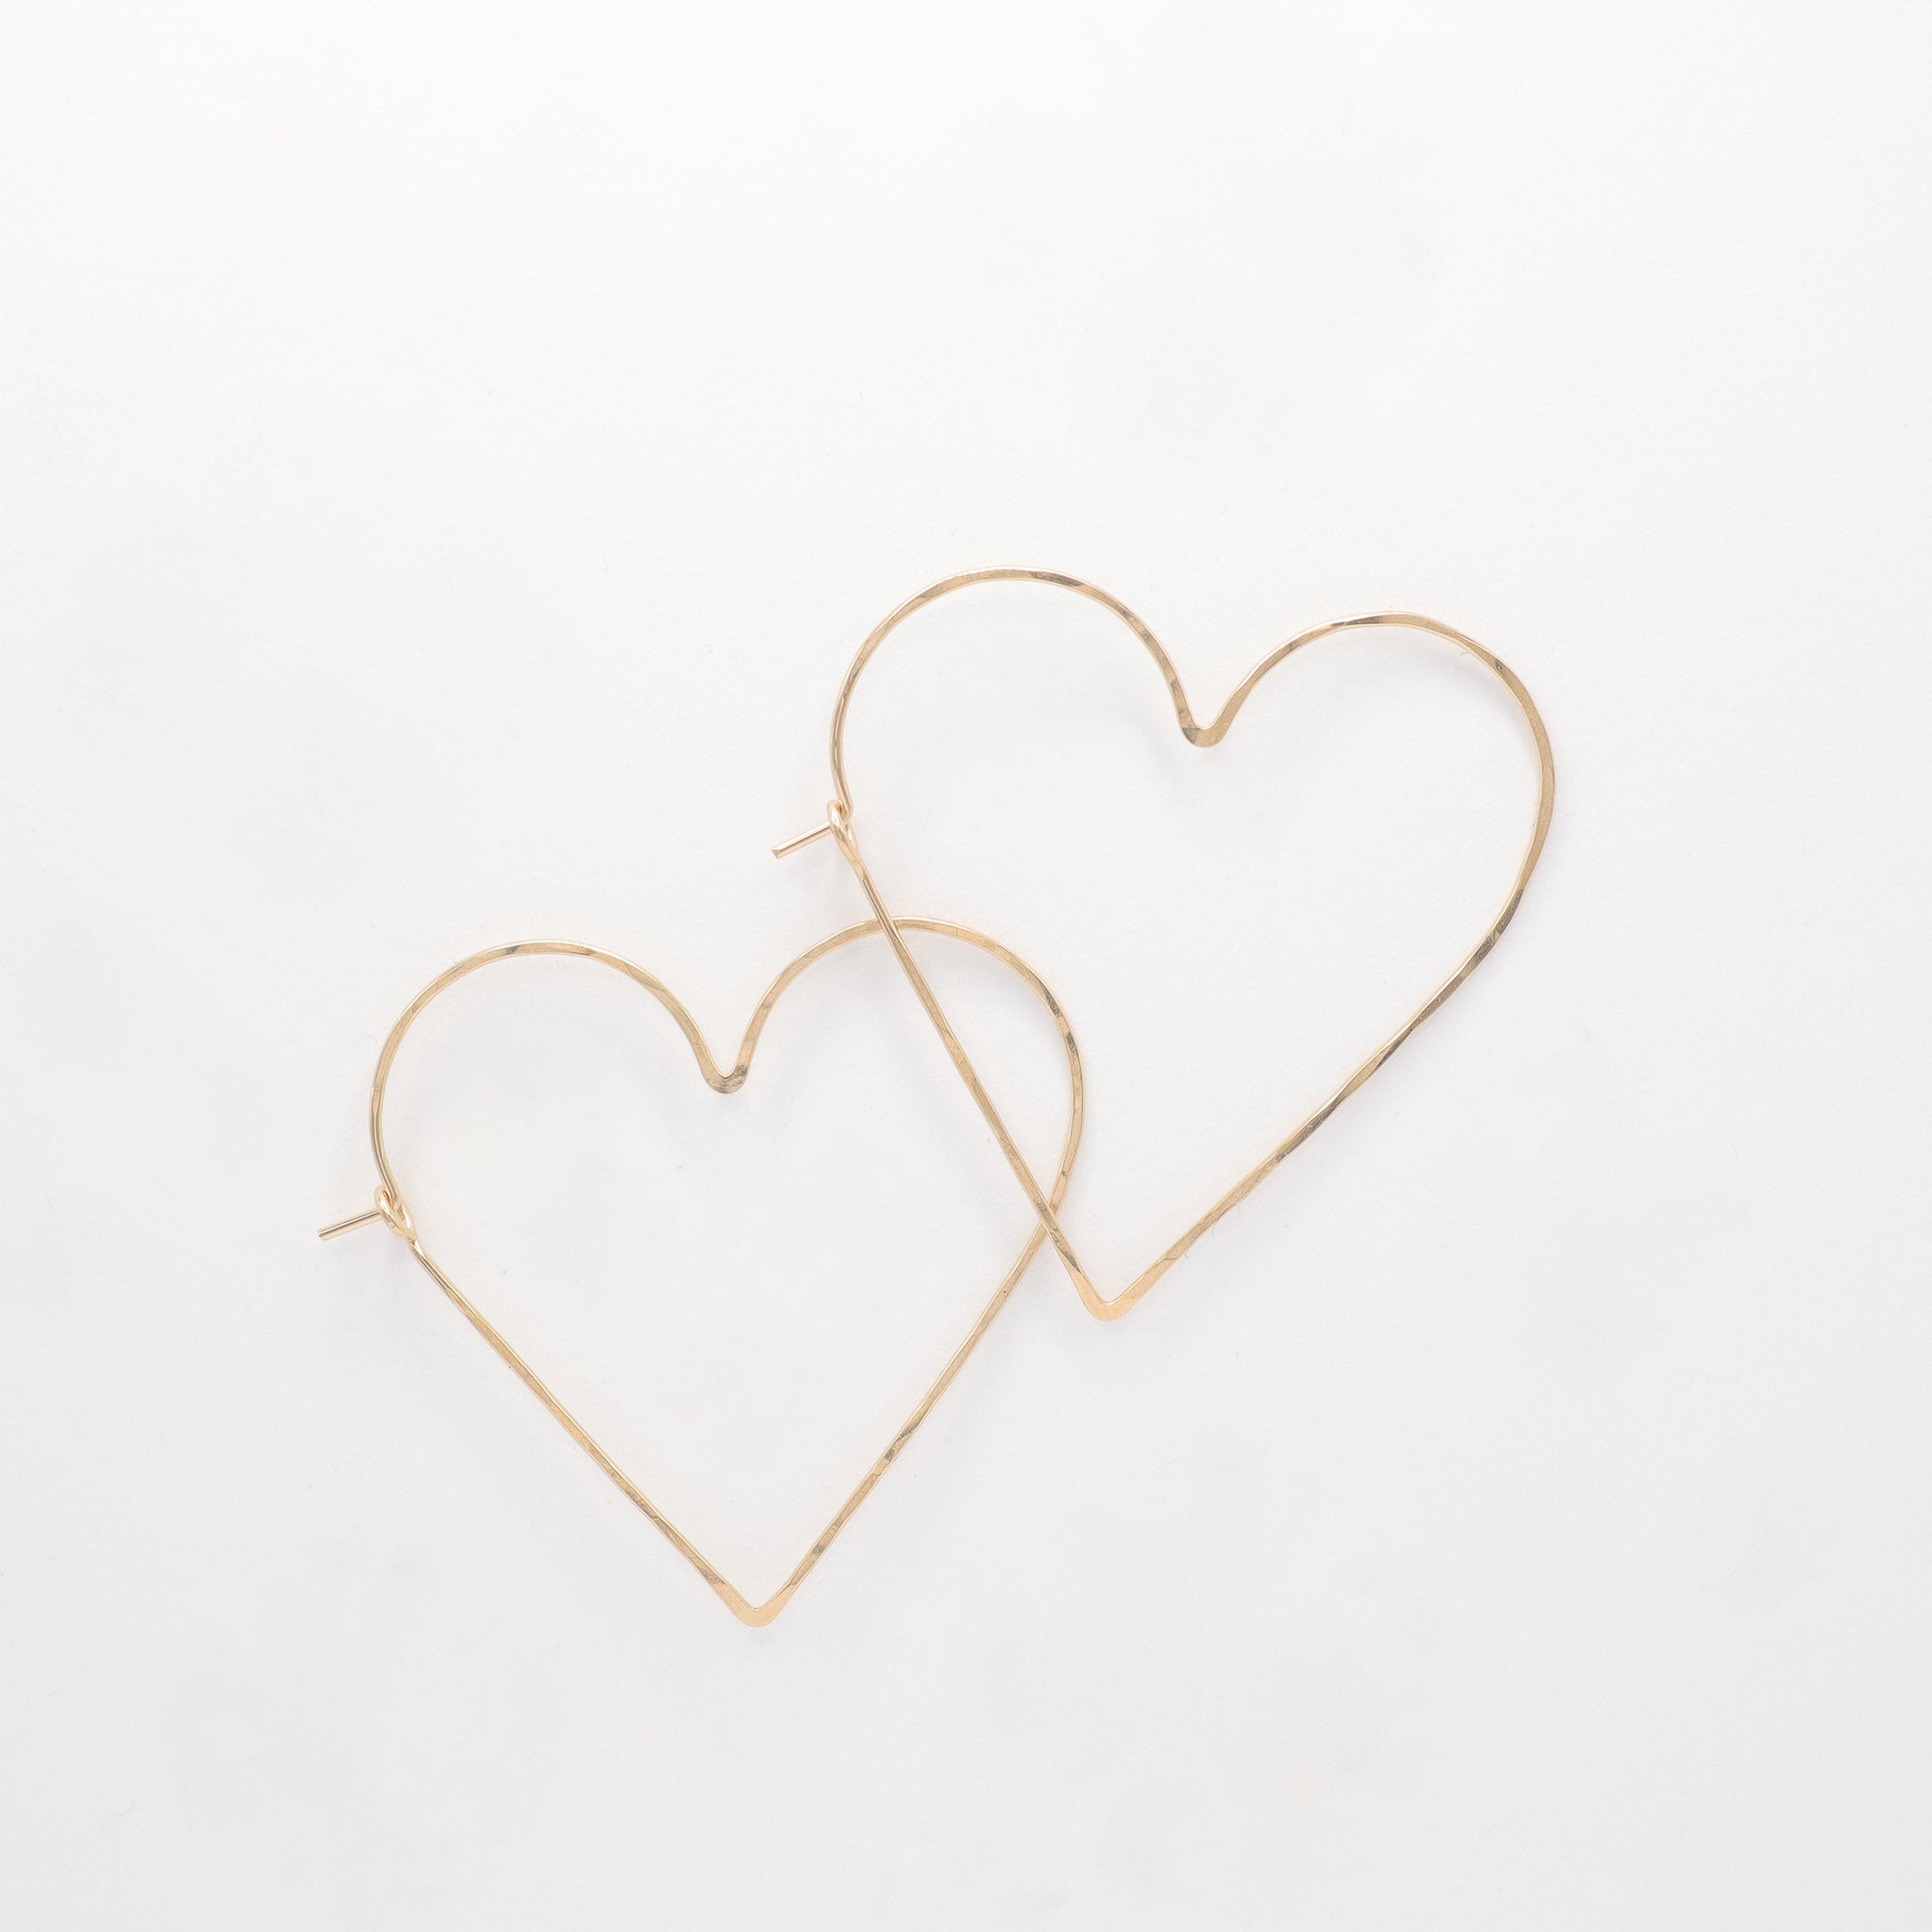 Gold Heart Hoop Earrings, featured image